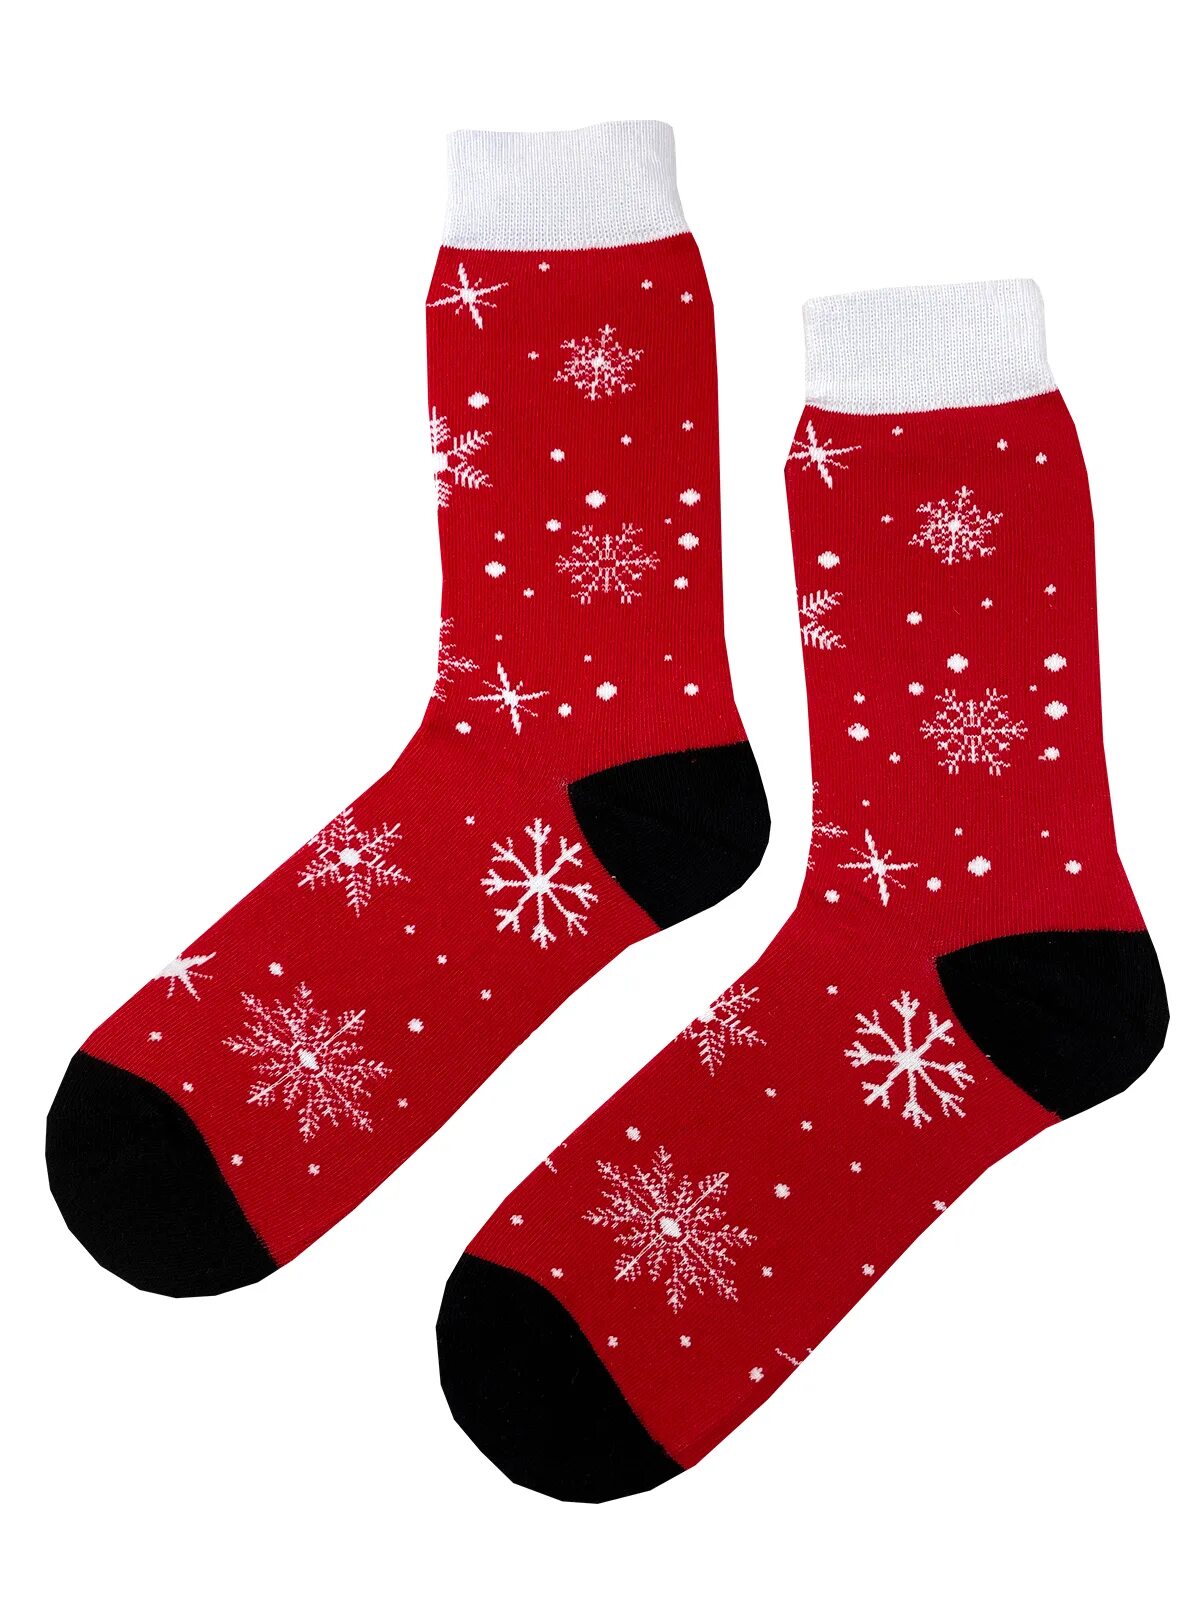 Носки со снежинками. Новогодние носки для мужчин. Новогодние носки для мальчика. Носки новогодние мужские Снежинка.